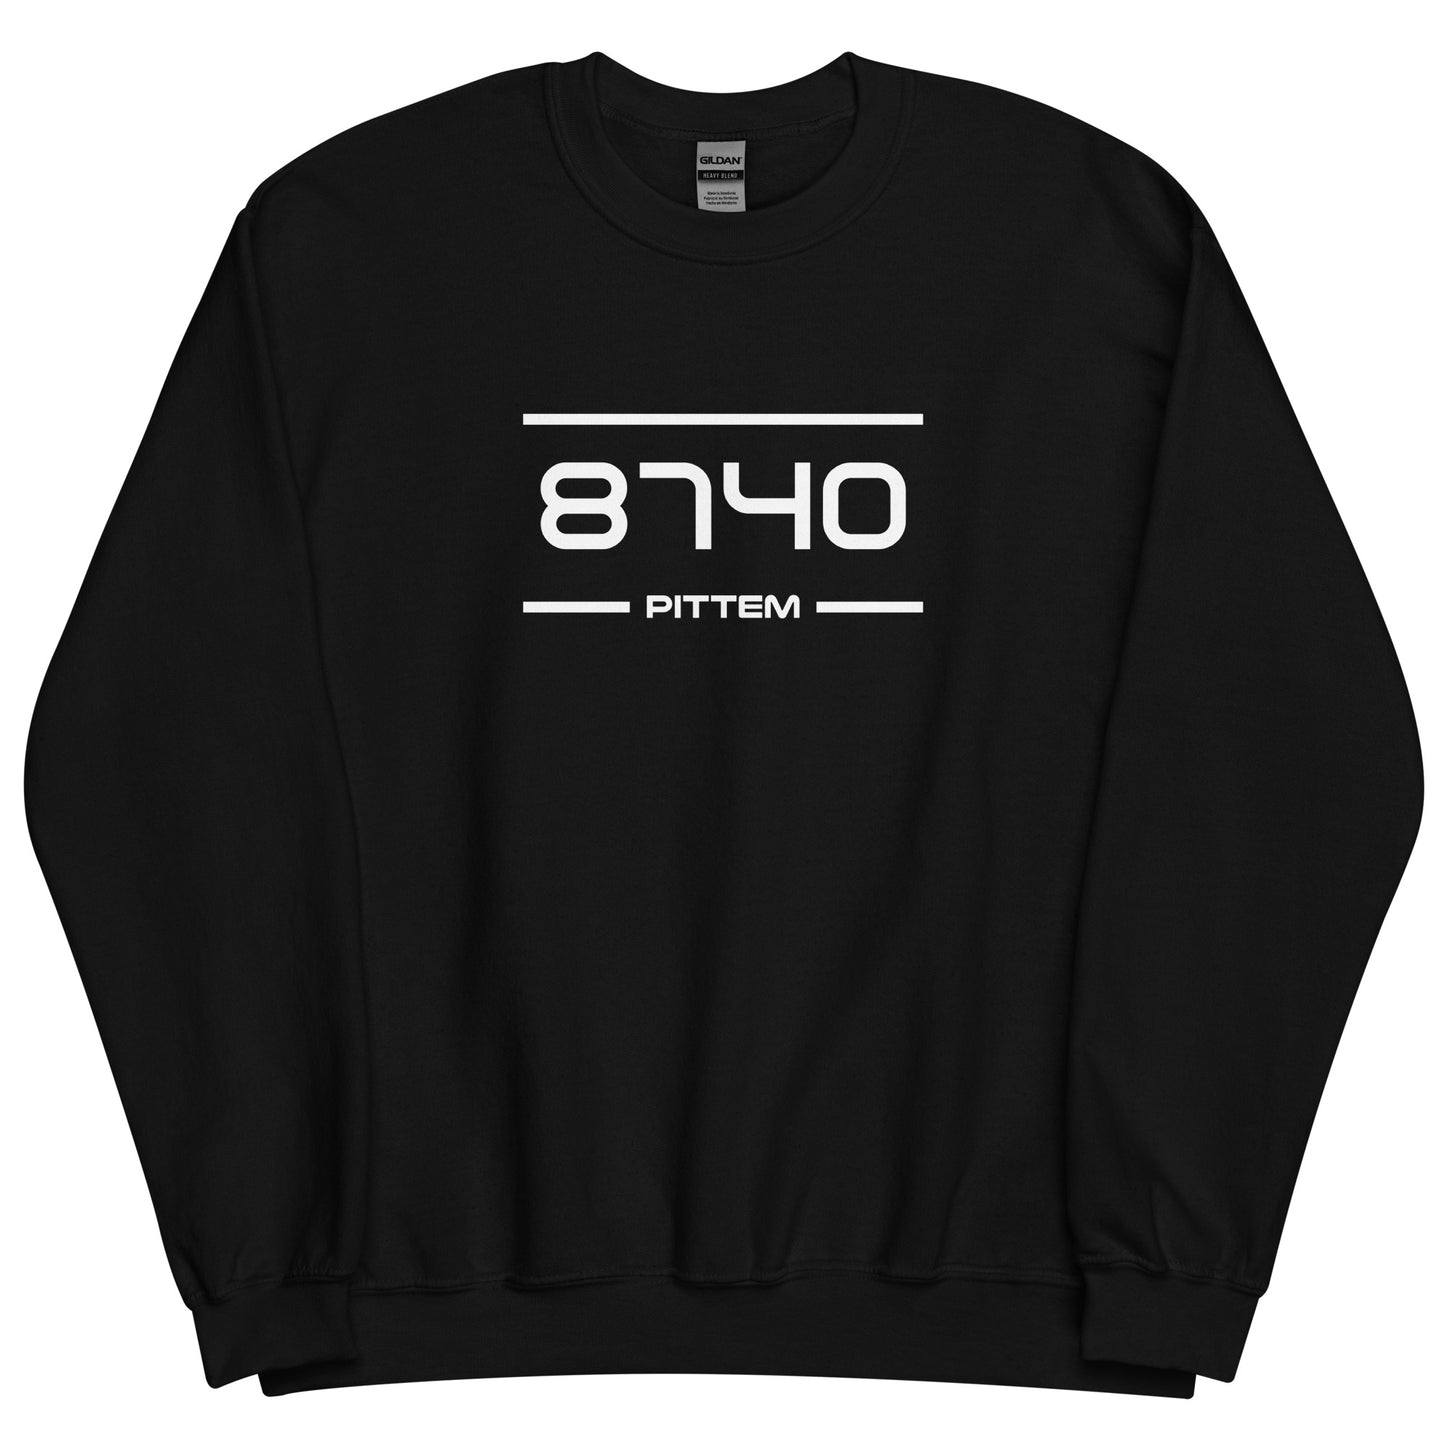 Sweater - 8740 - Pittem (M/V)